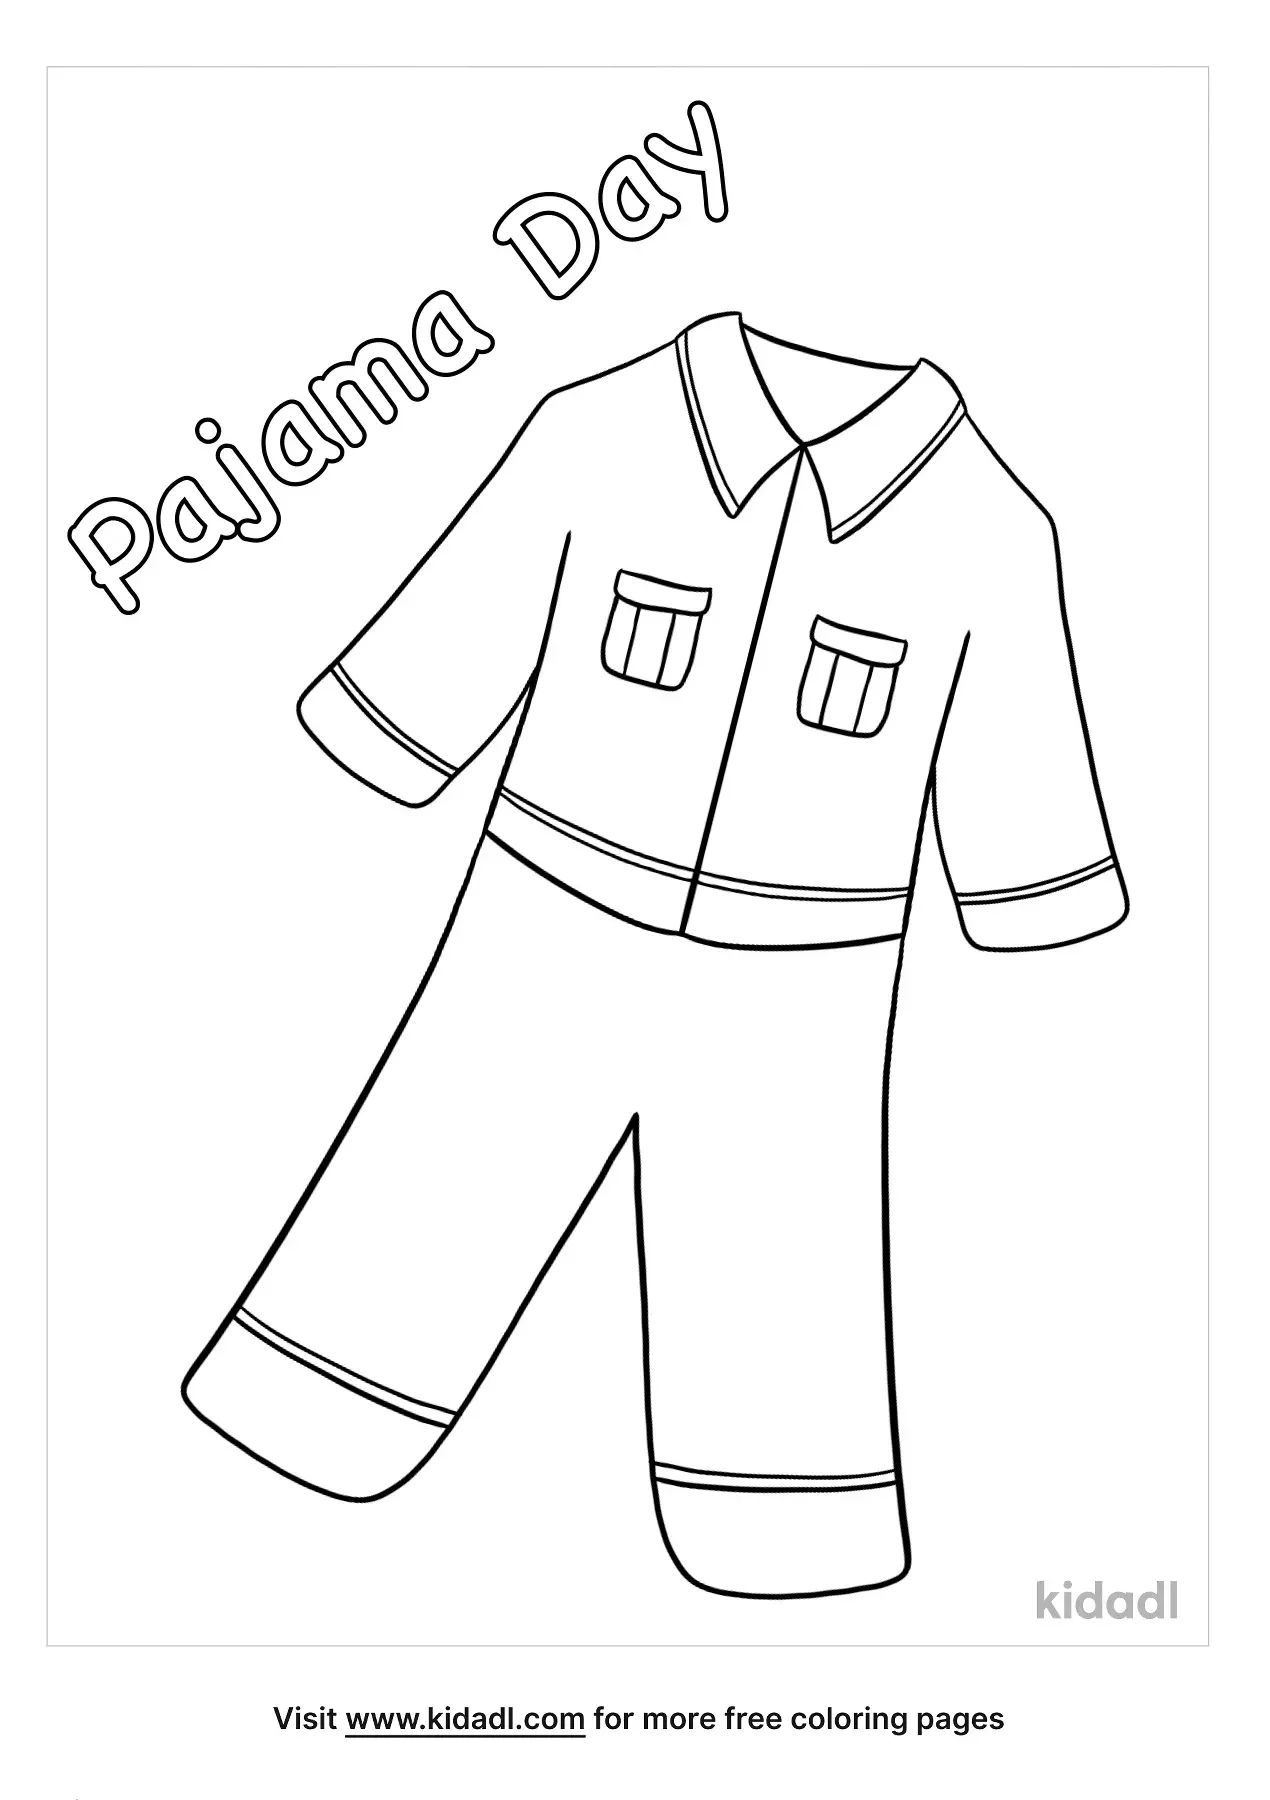 Printable Pajama Template